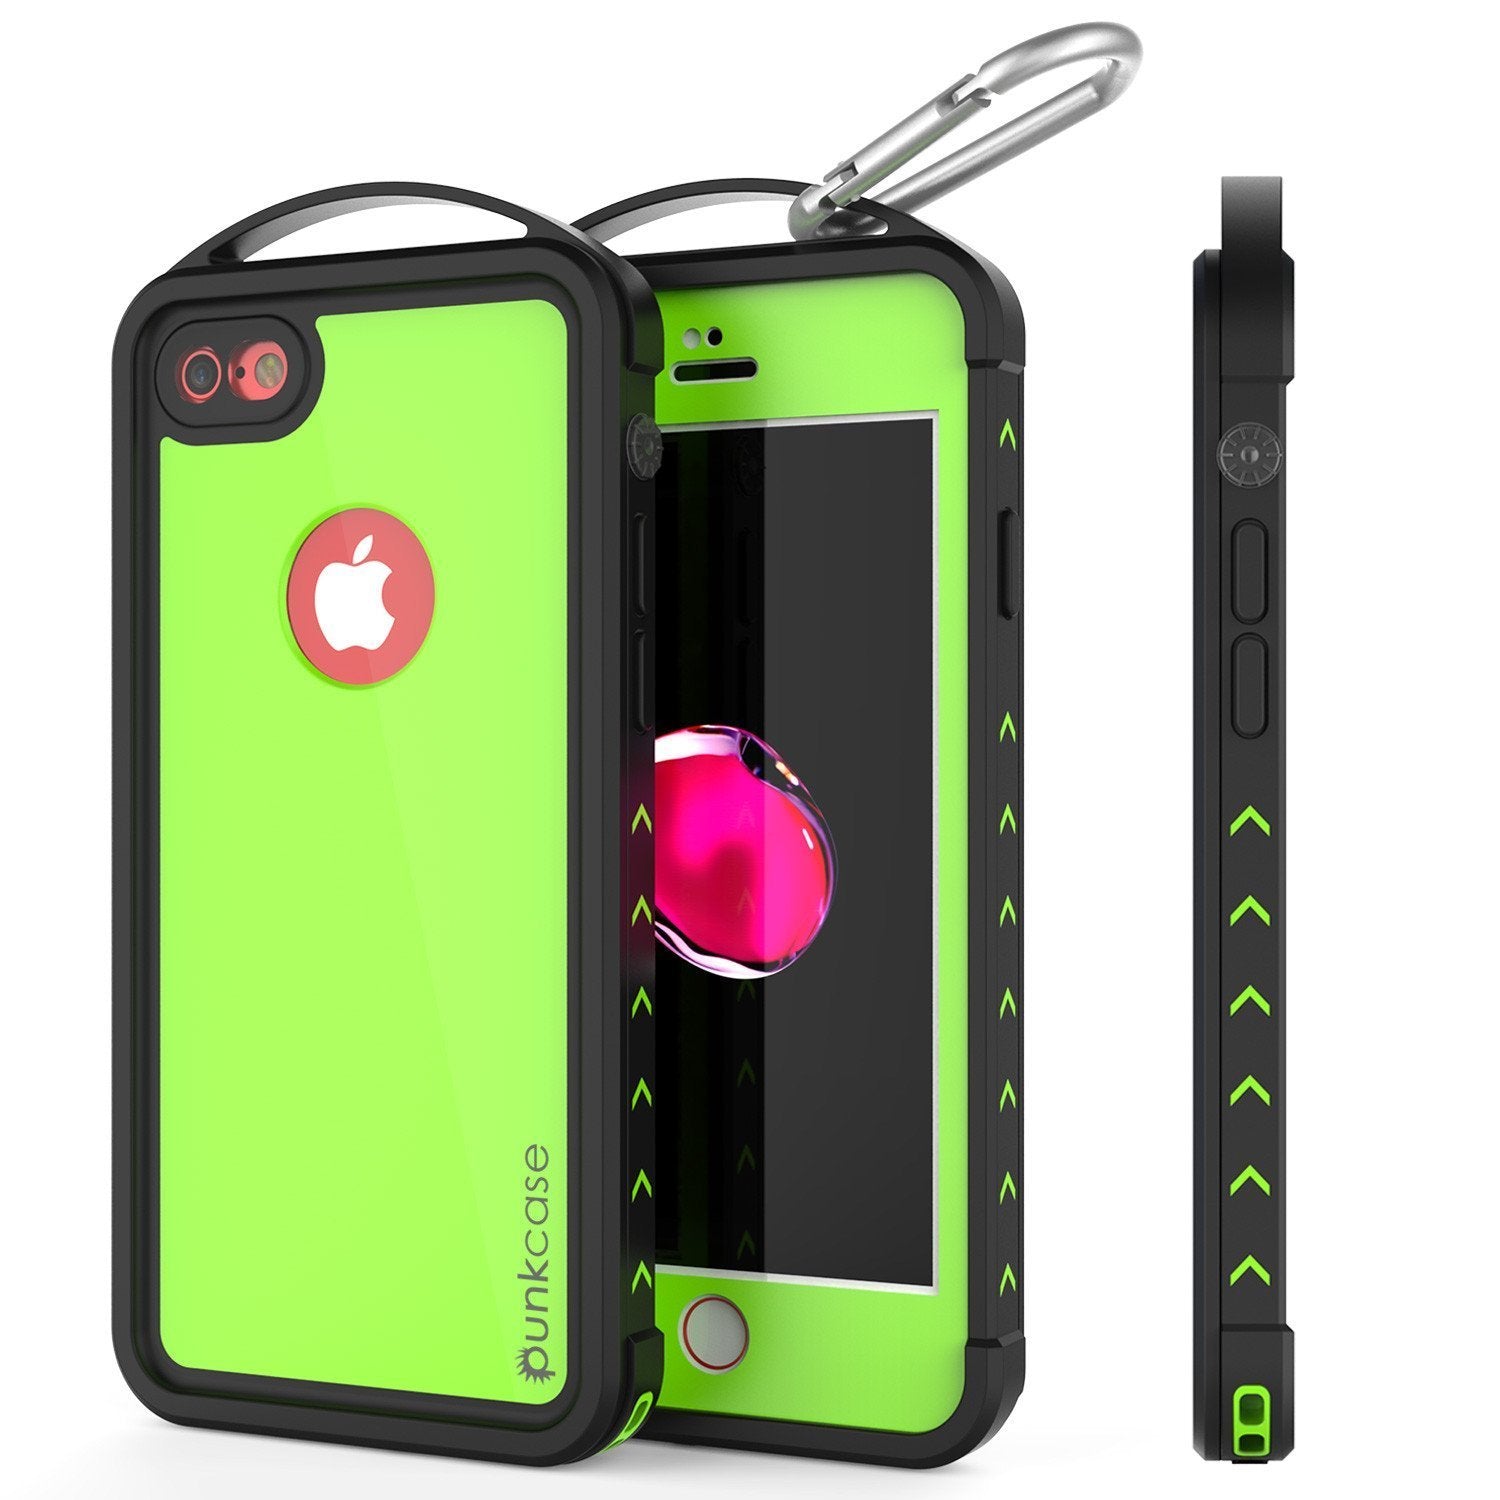 iPhone SE (4.7") Waterproof Case, Punkcase ALPINE Series, Light Green